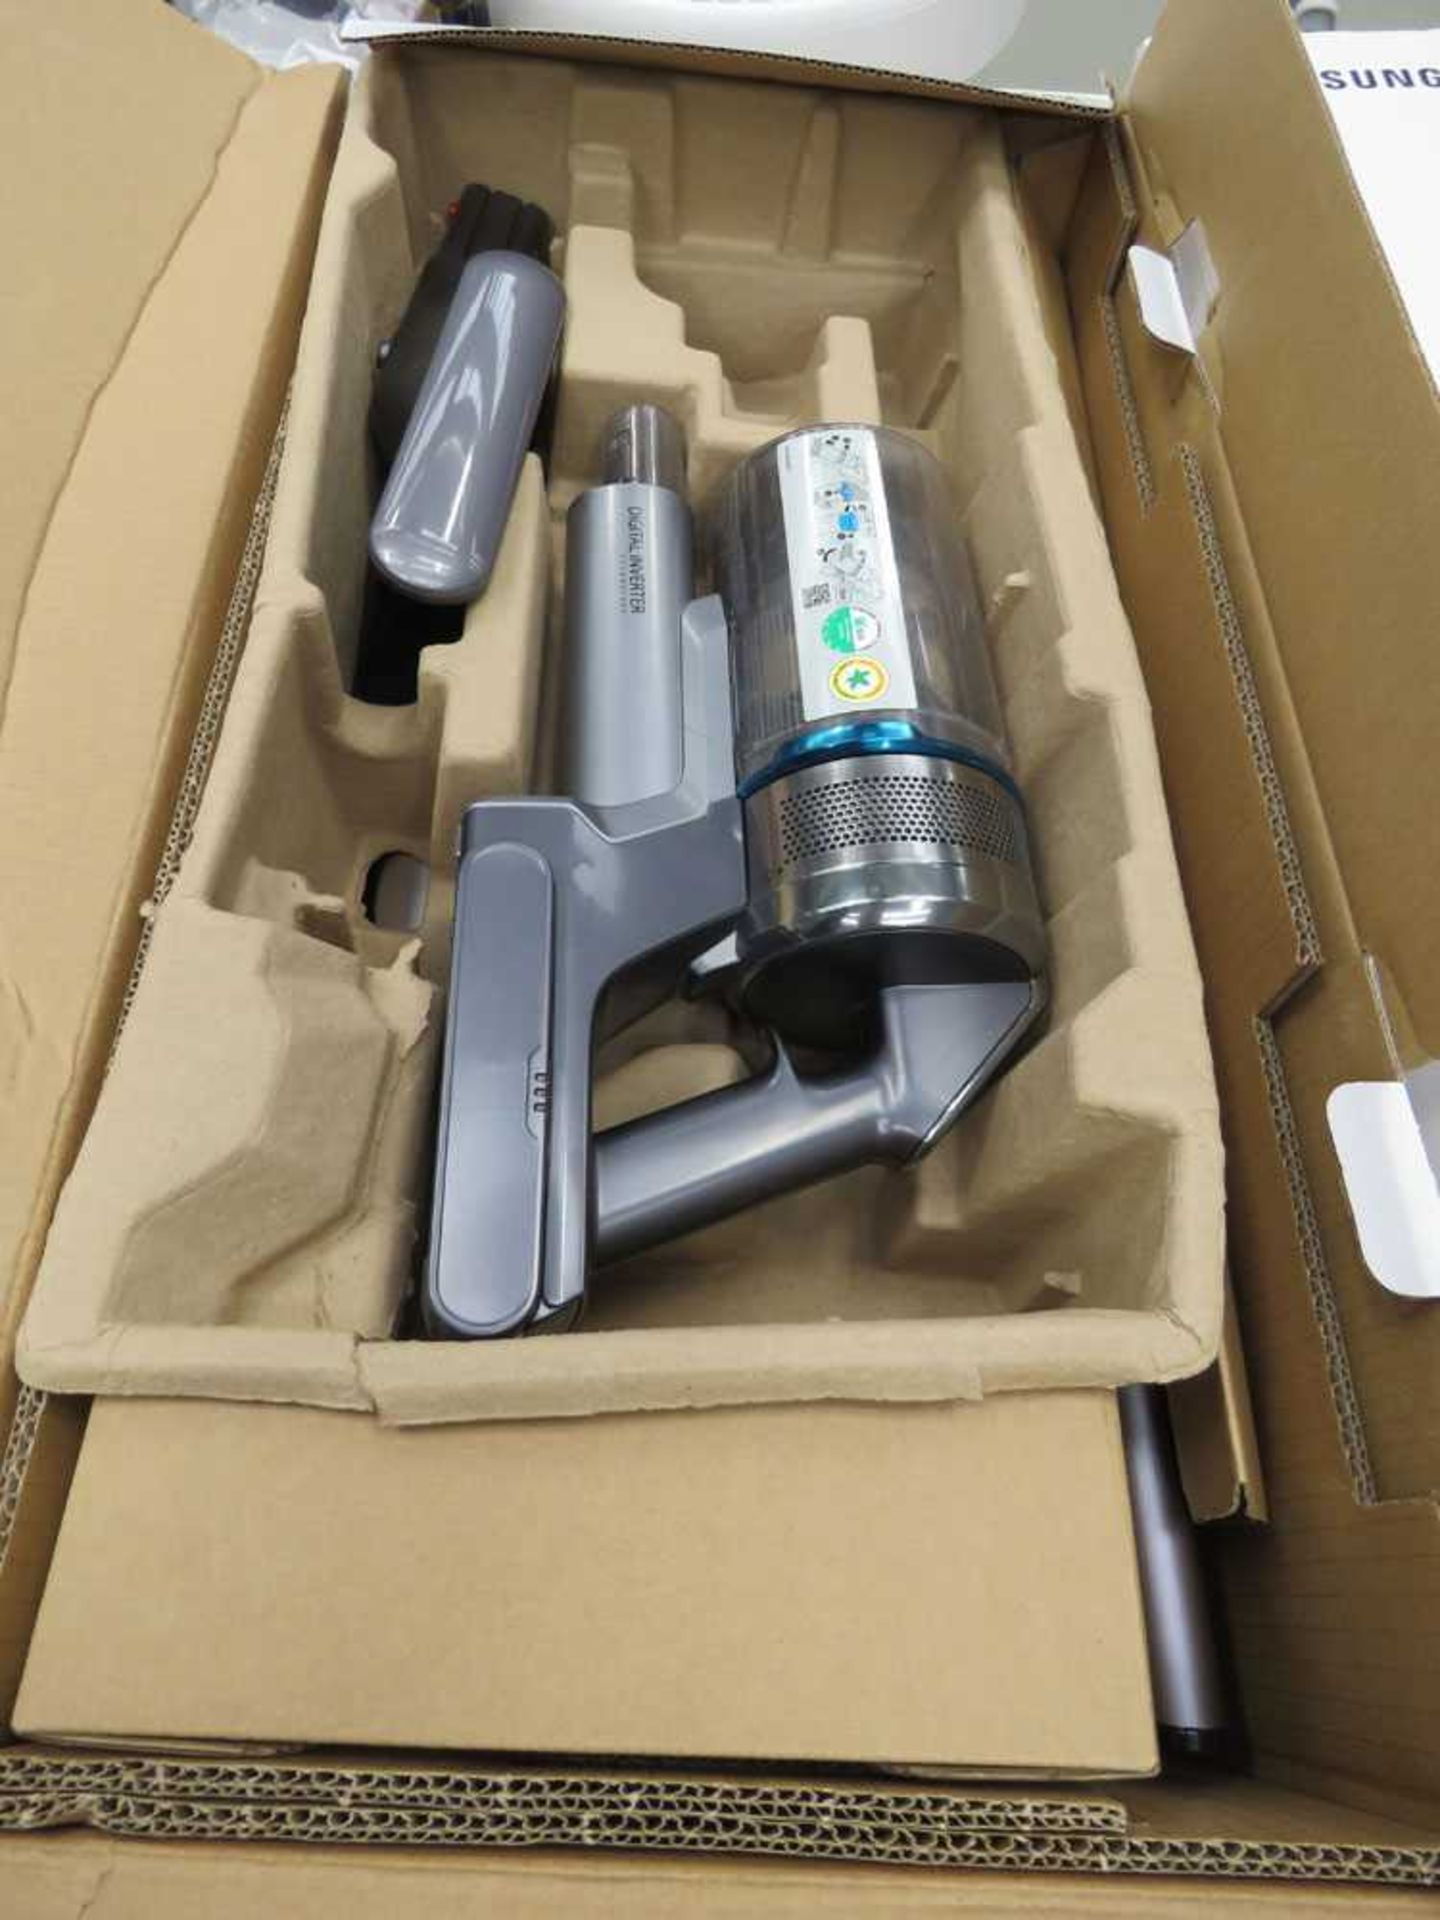 +VAT Samsung power stick jet V79000 vacuum cleaner in box - Image 2 of 2